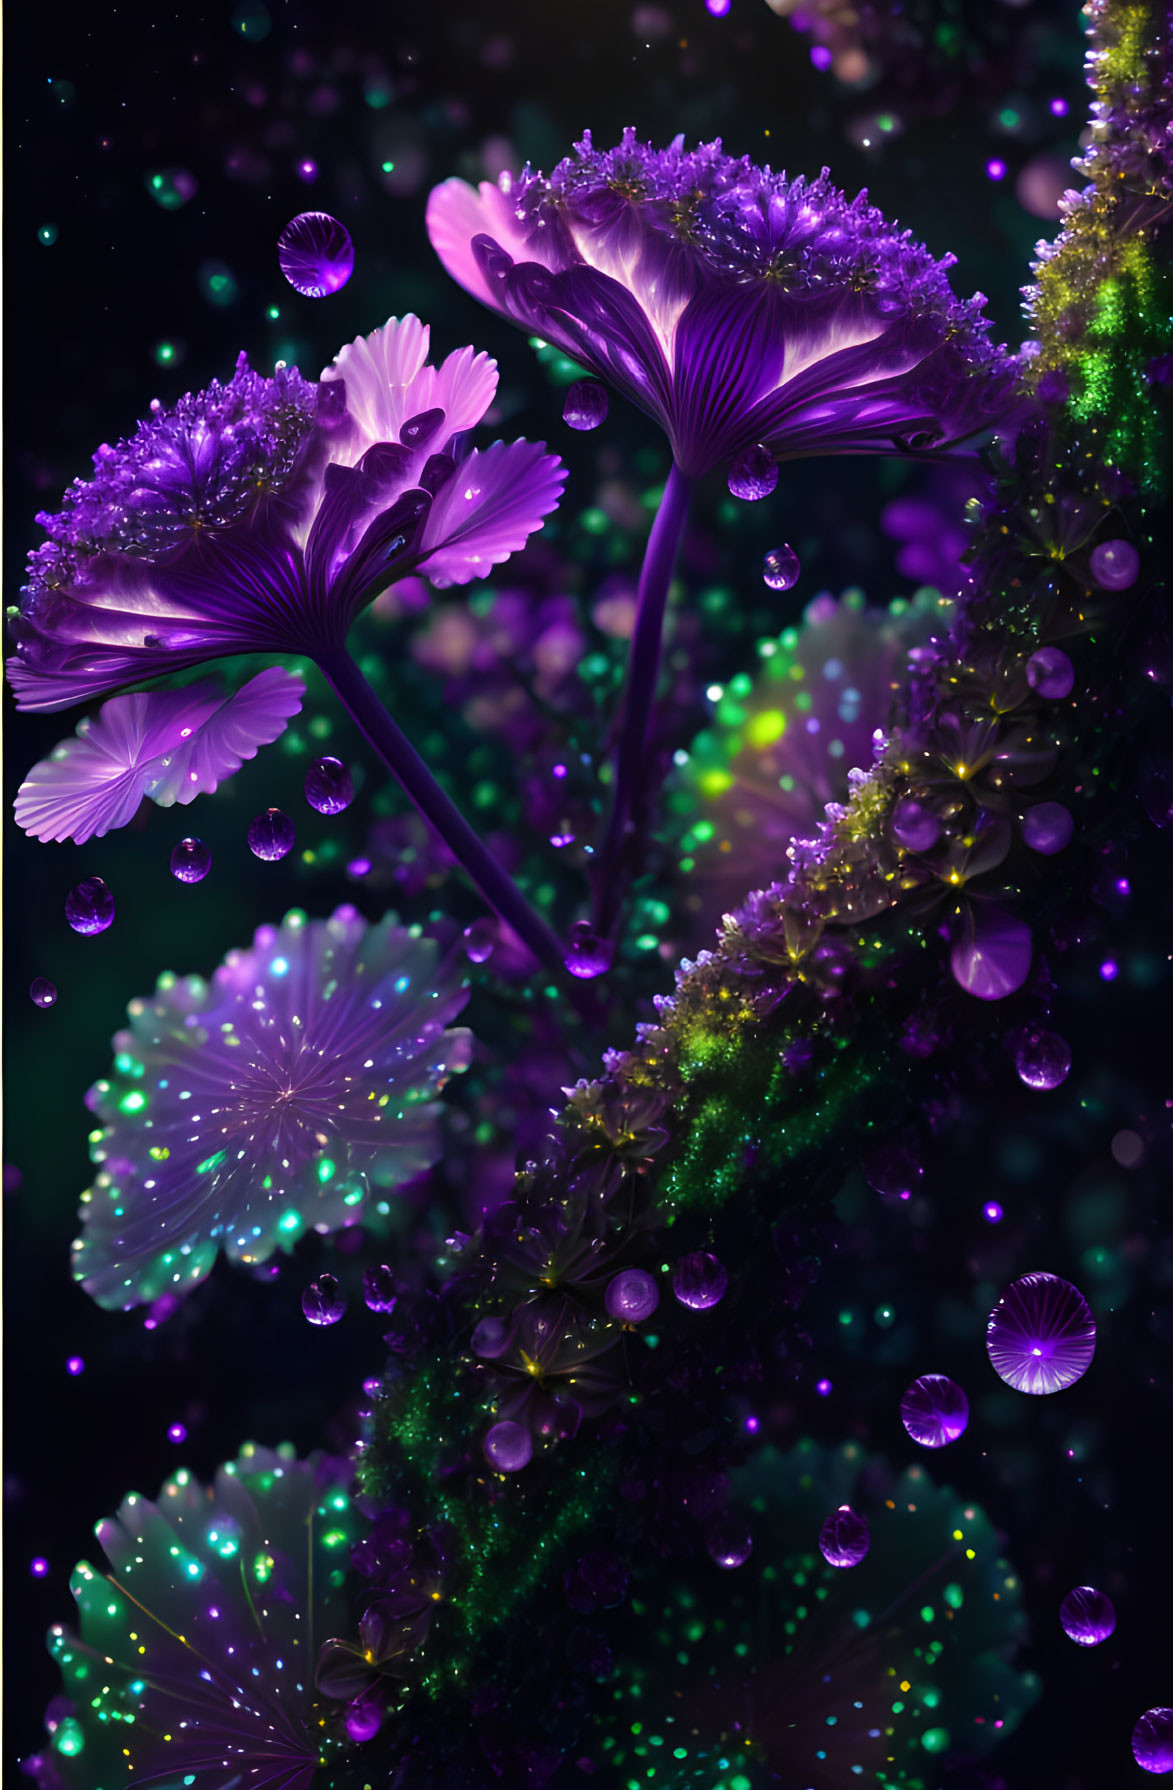 Digital Art: Luminescent Purple Flowers on Magical Dark Background